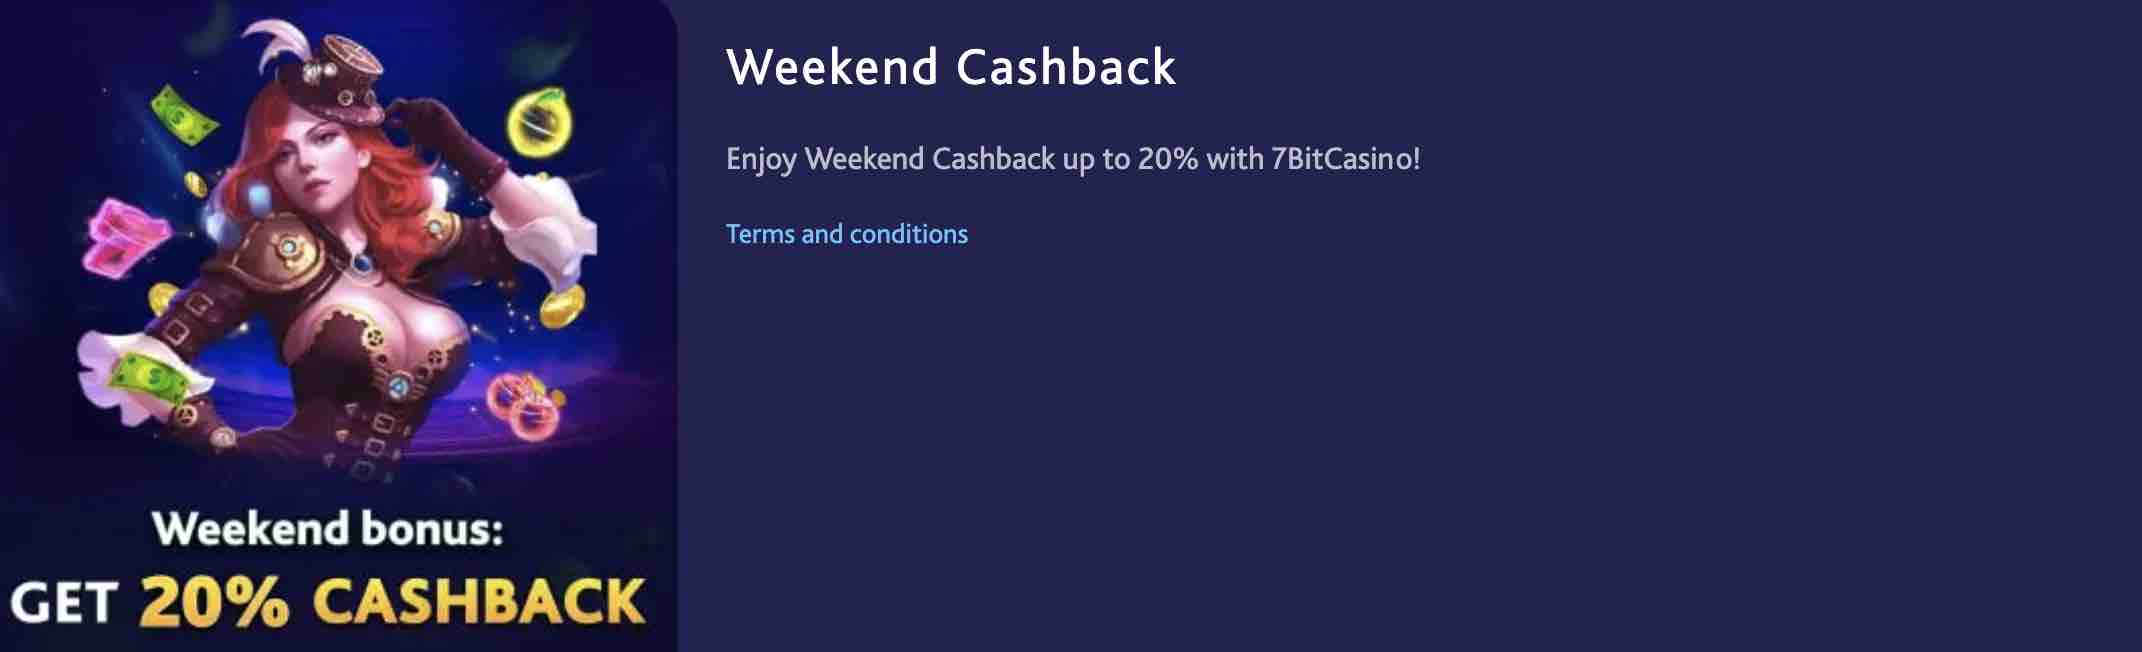 Screenshot of the Weekend Cashback bonus on the 7bit casino website